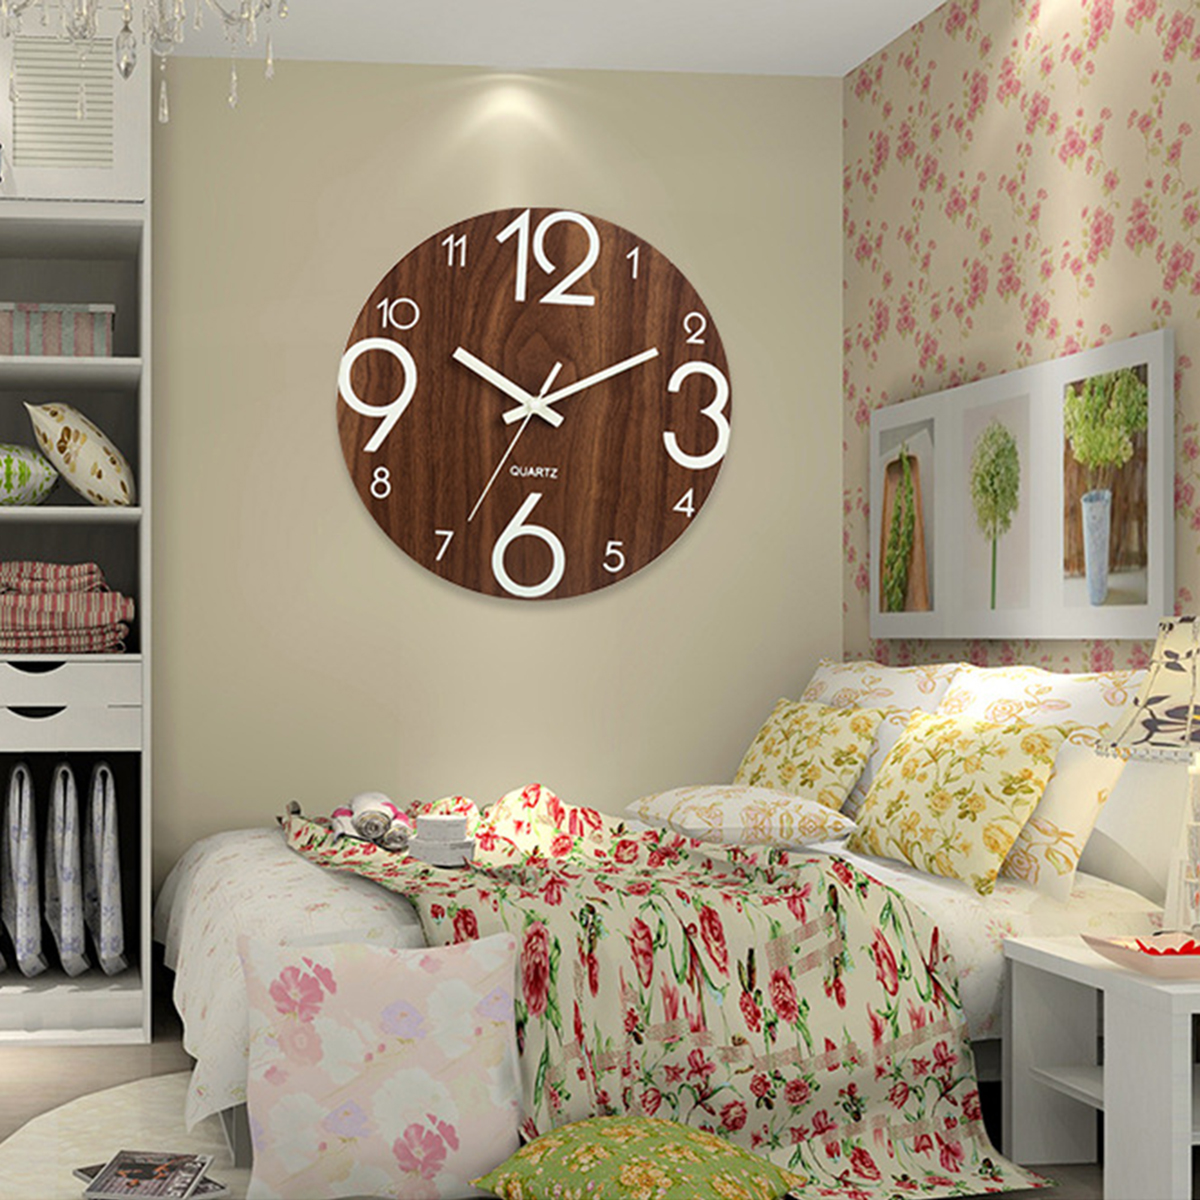 12quot-Luminous-Wall-Clock-Quartz-Wooden-Silent-Non-Ticking-Dark-Home-Room-Decor-1496359-7